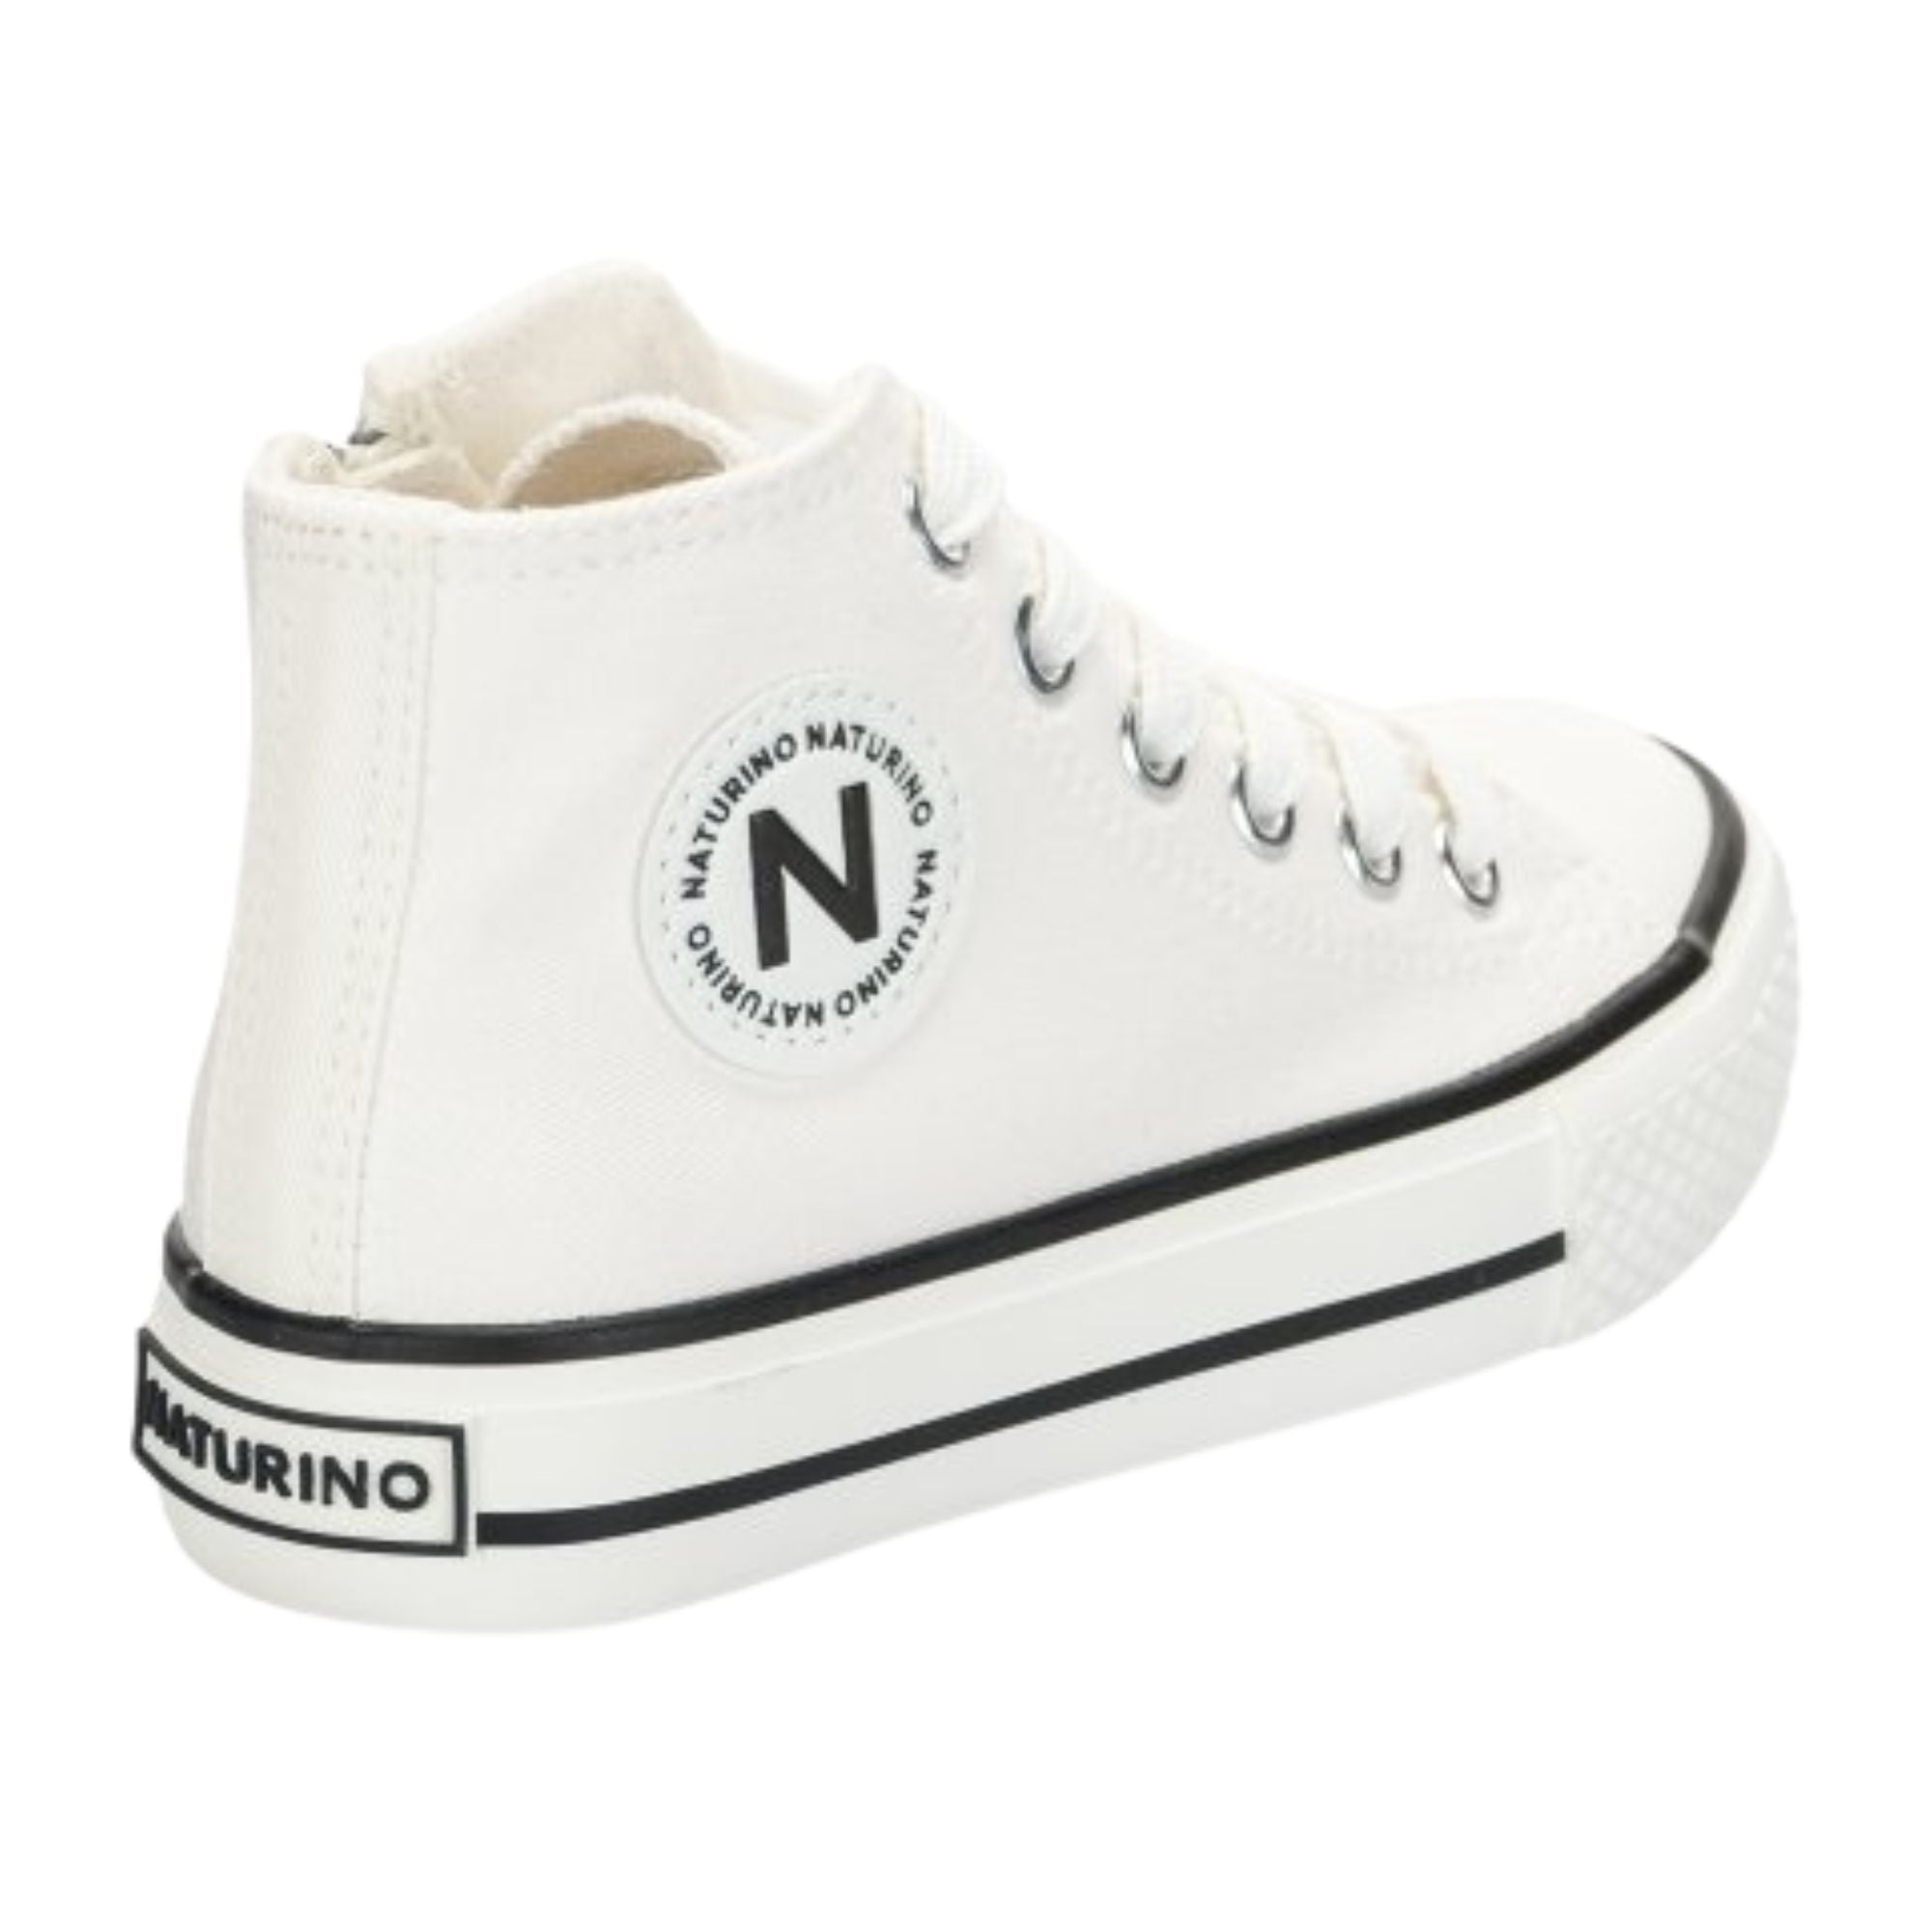 Naturino Baby Boys Delave White Sneakers